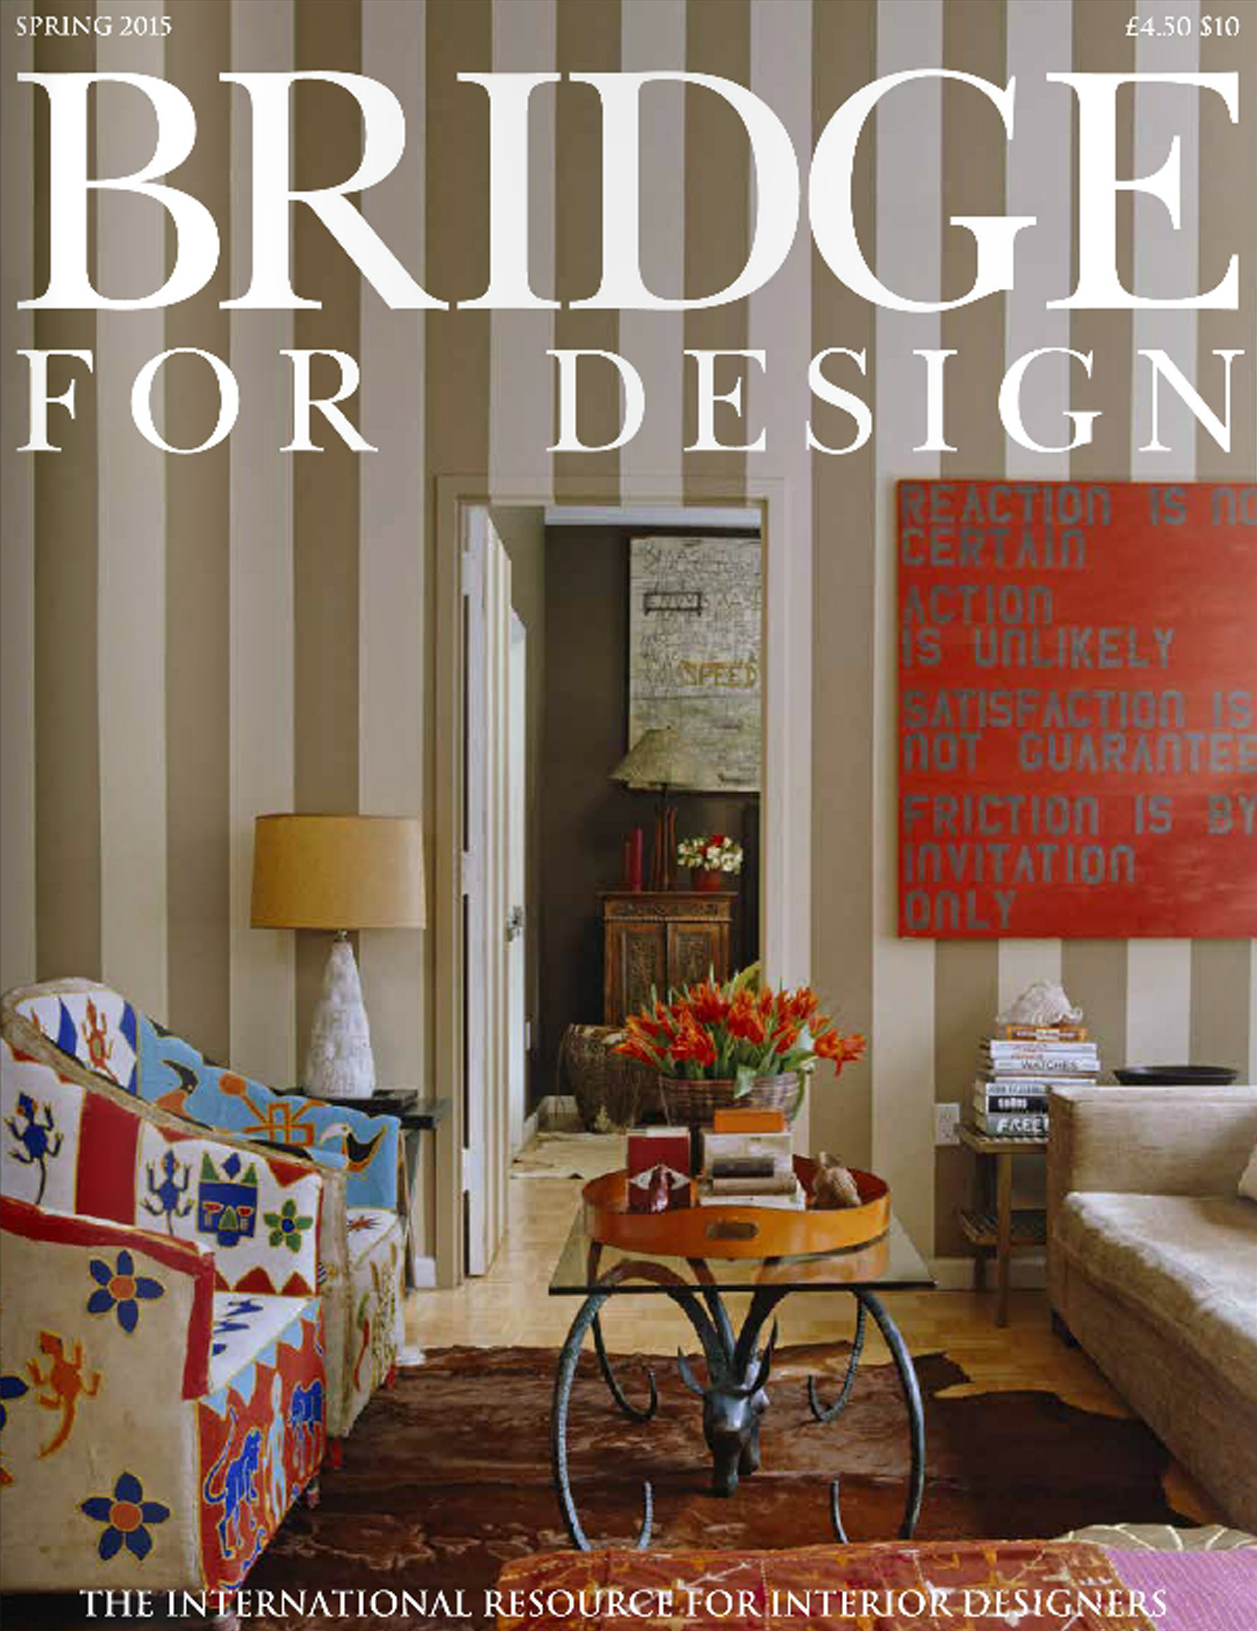 Bridge for design magazine Kingham bespoke kitchen design feature Spring 2015